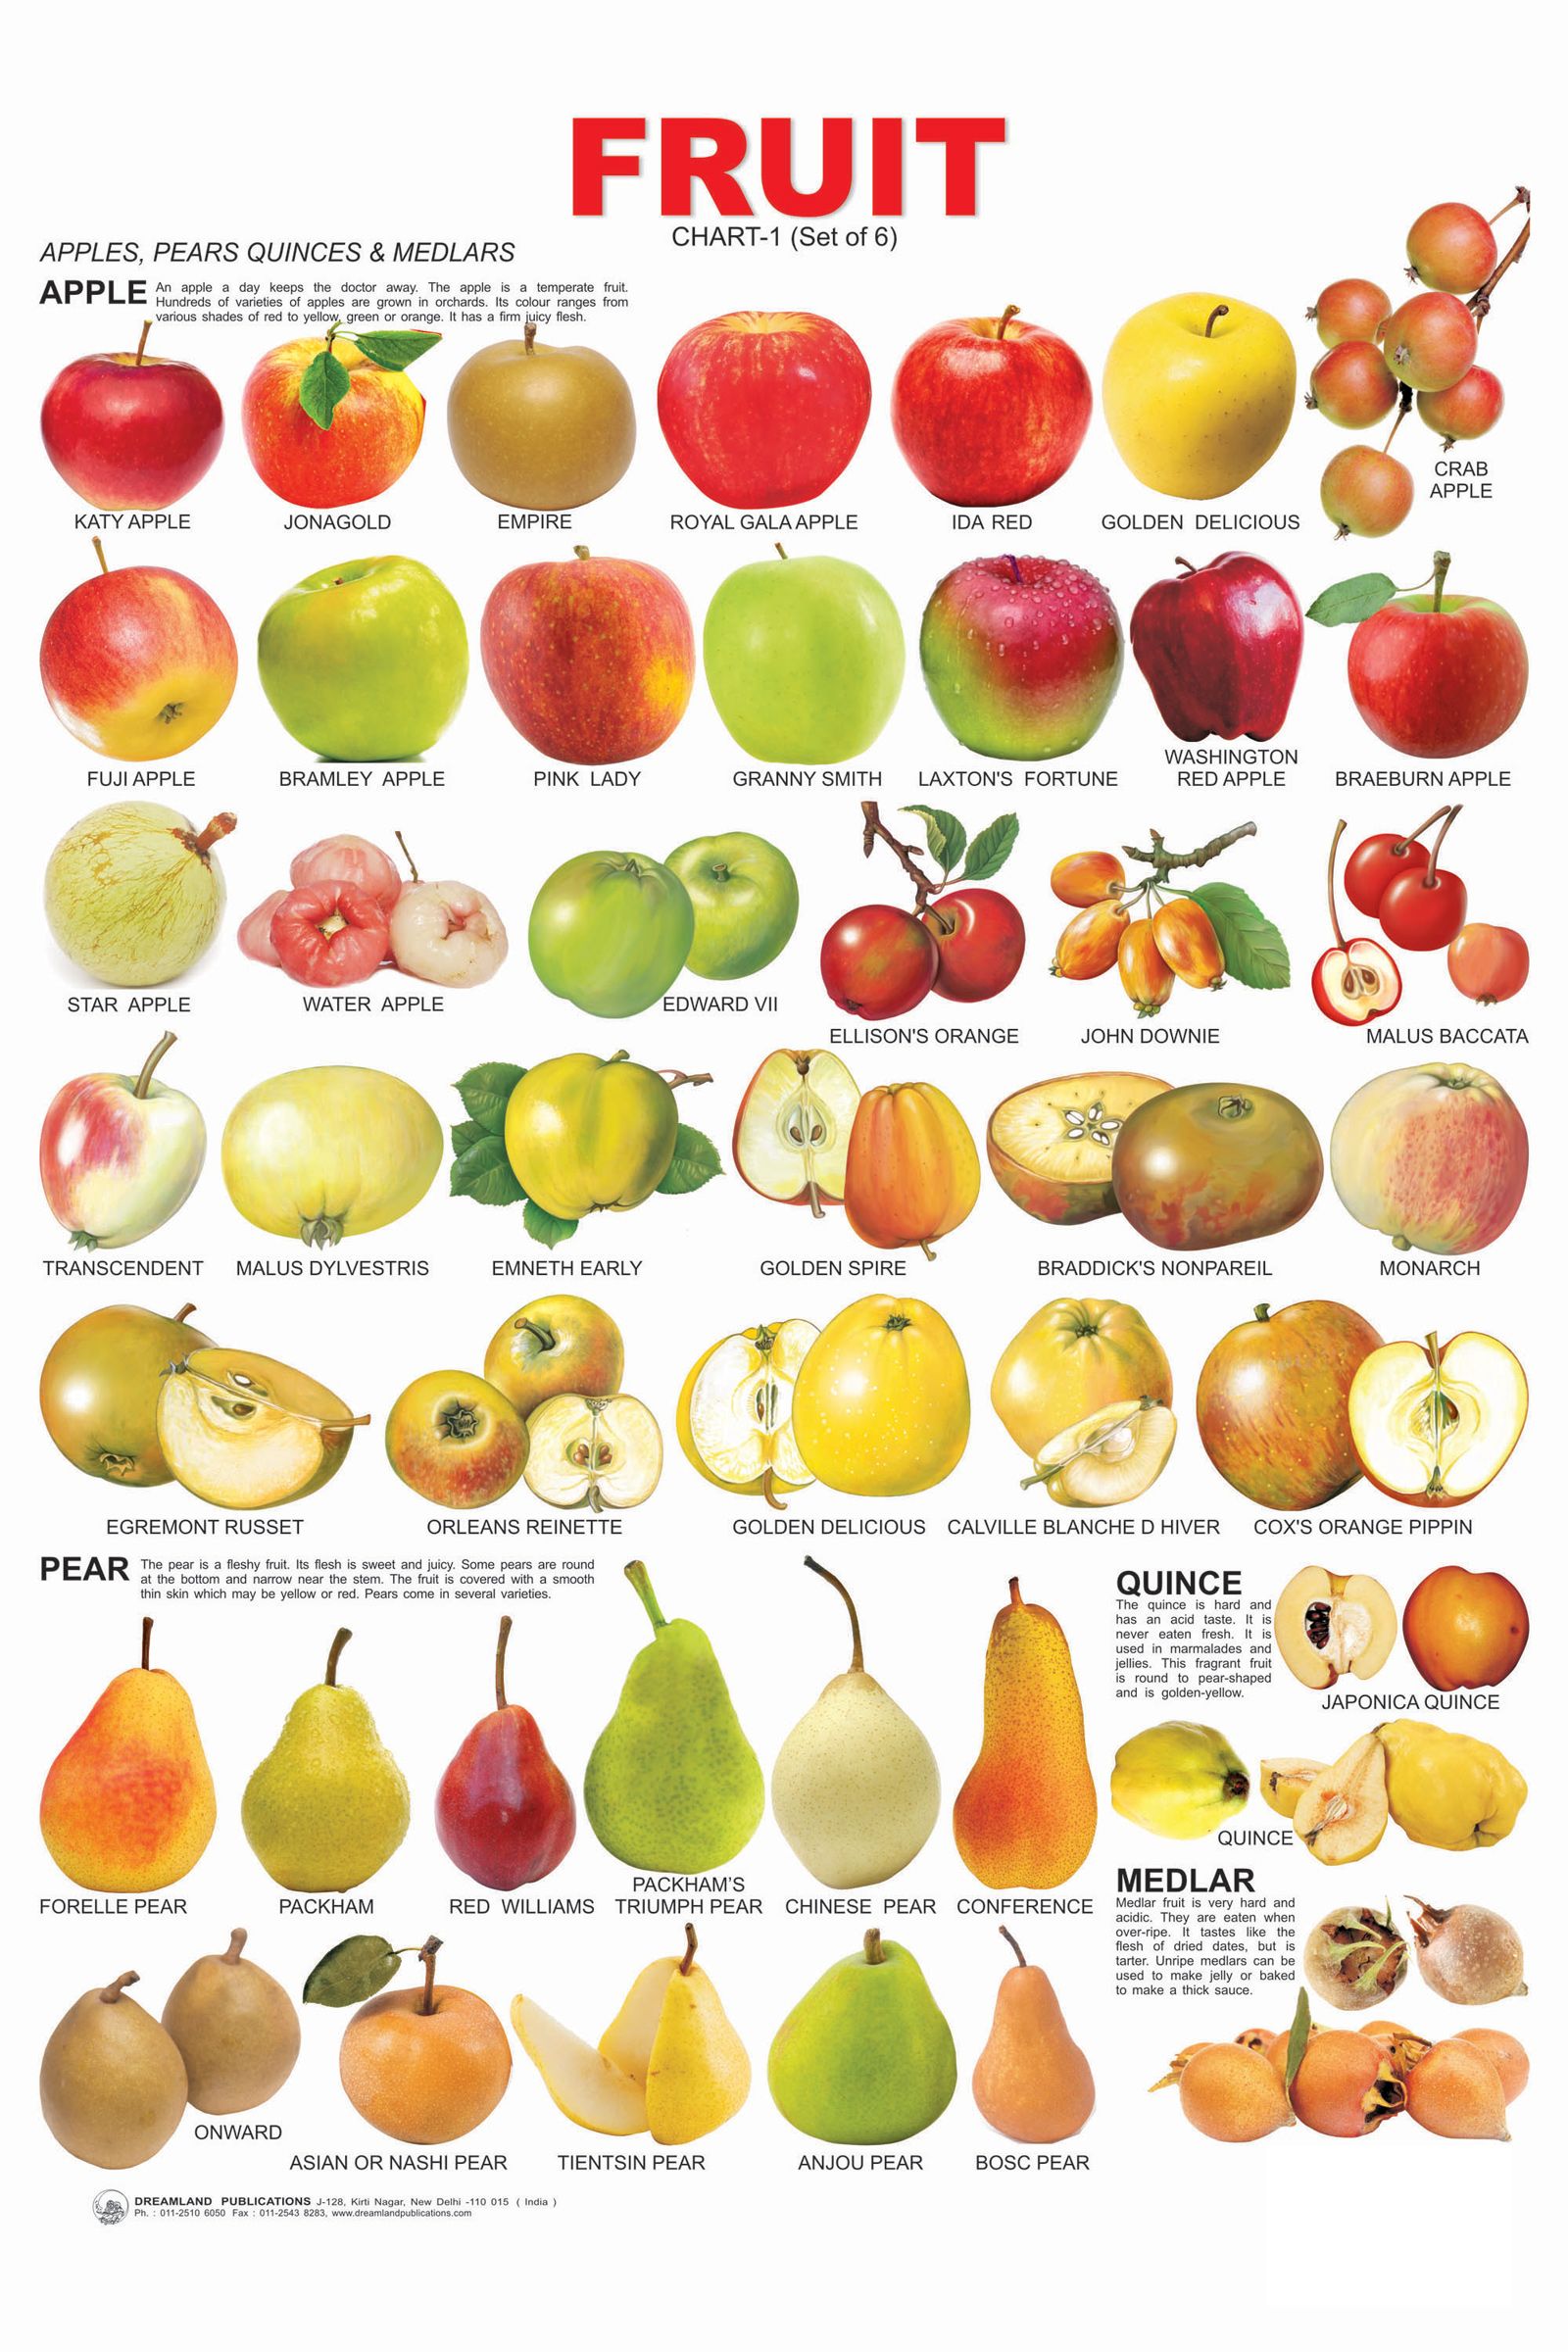 Gallery of Bra Fruit Chart.